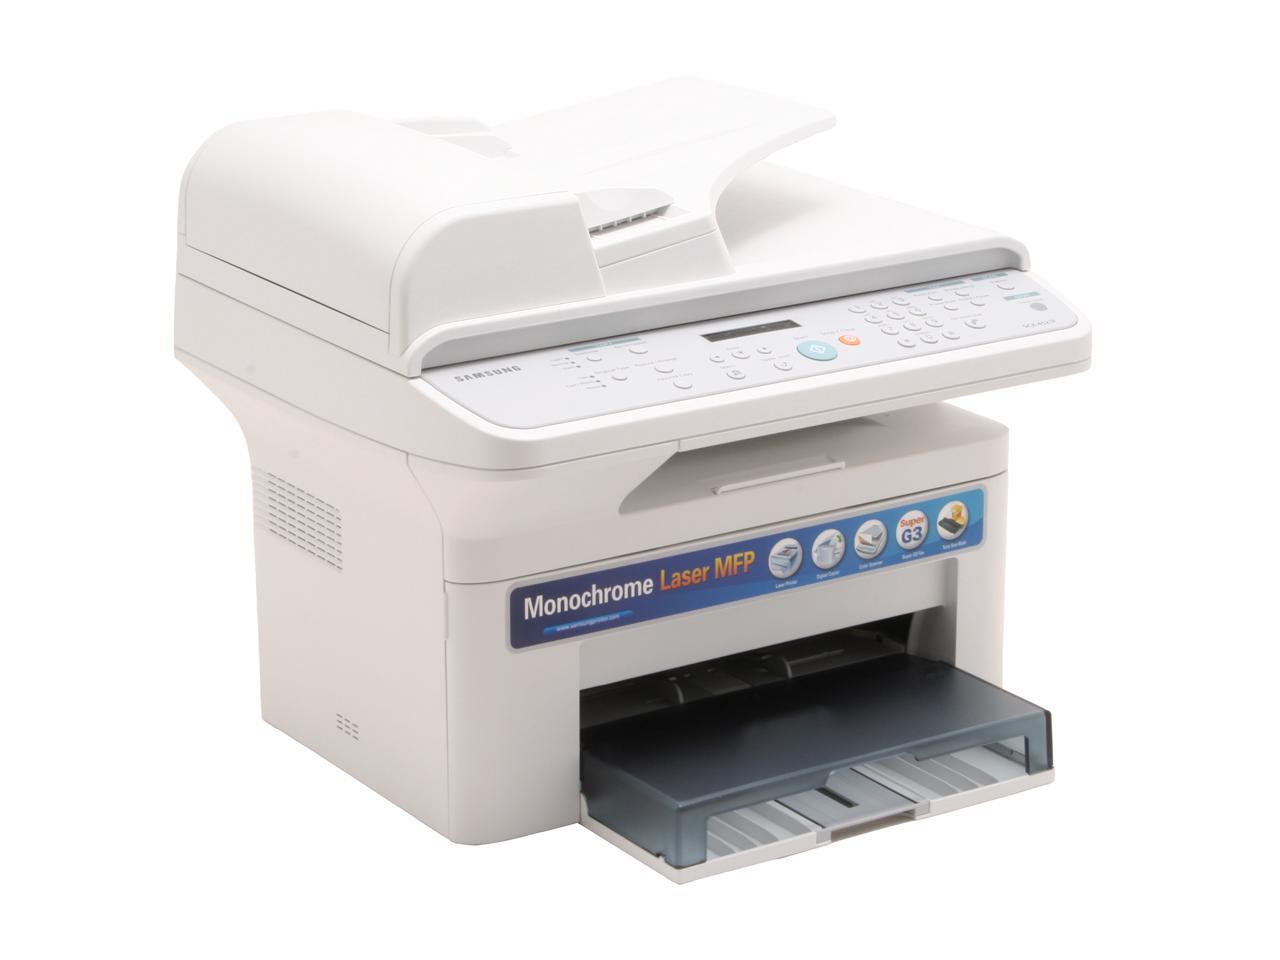 İhtiyaç halinde At Dan beri  Samsung SCX-4521F MFC / All-In-One Monochrome Laser Printer - Newegg.com